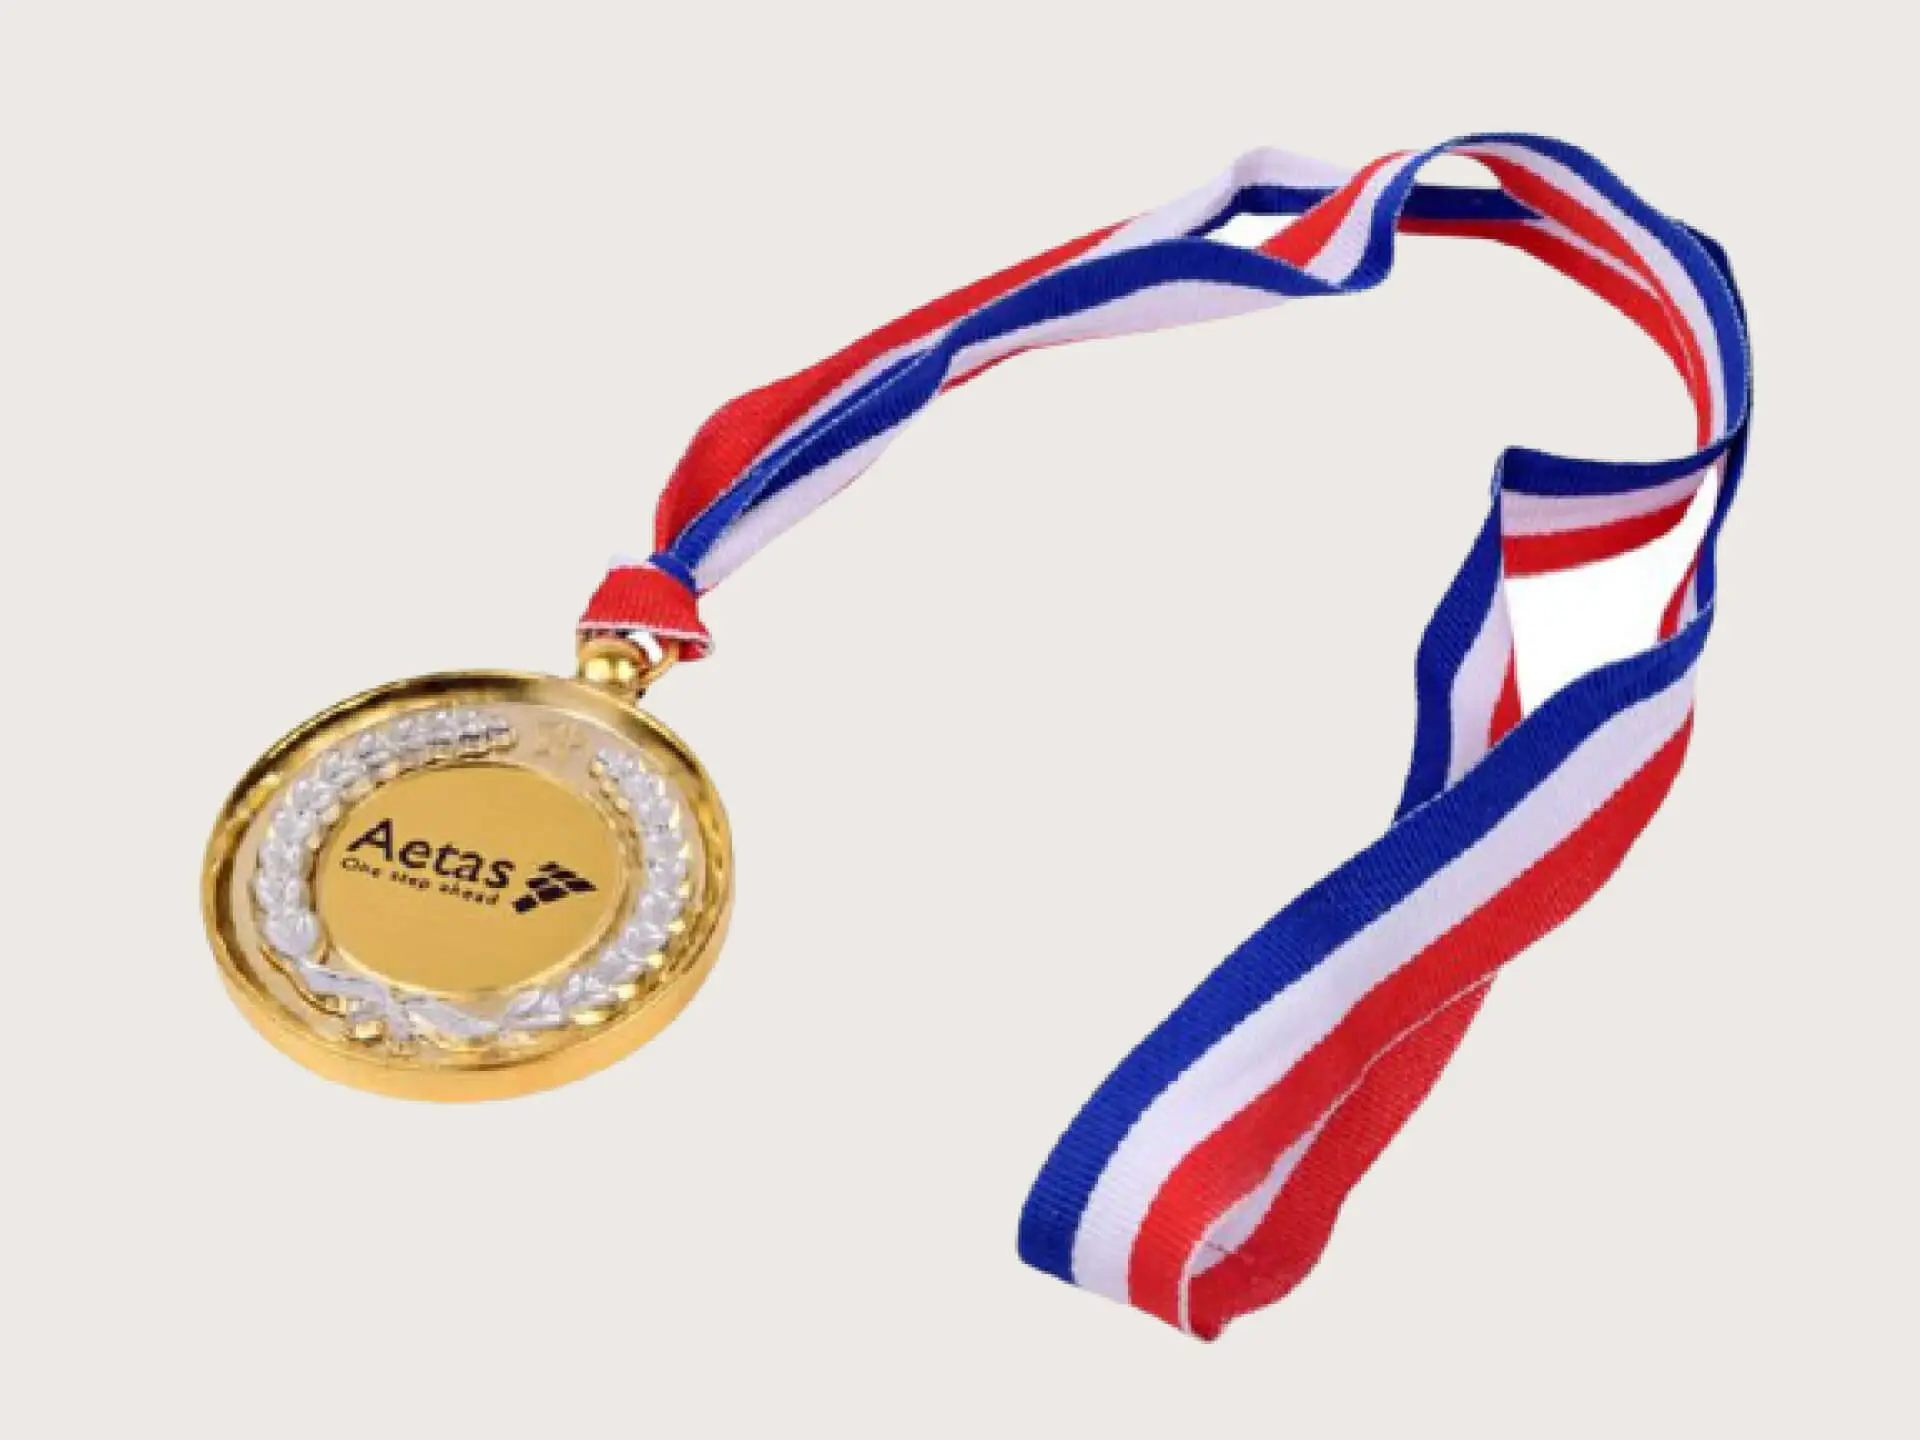 Personalized Laurel Medal